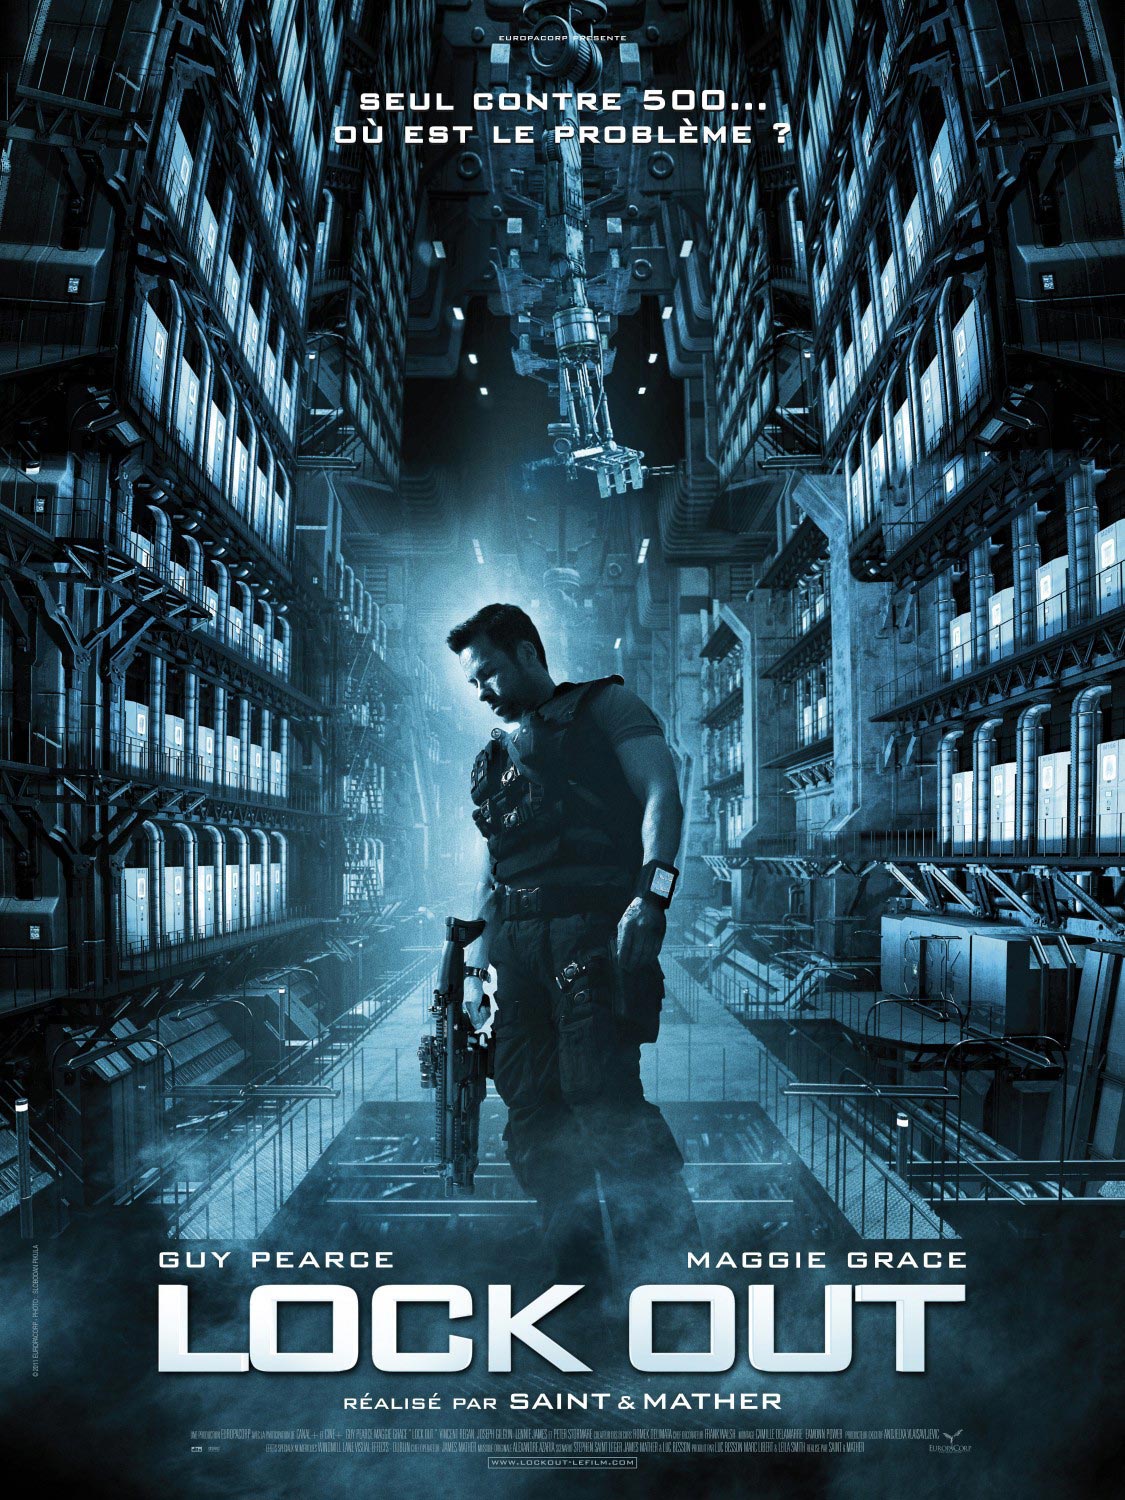 http://www.filmofilia.com/wp-content/uploads/2012/02/lockout_poster.jpg